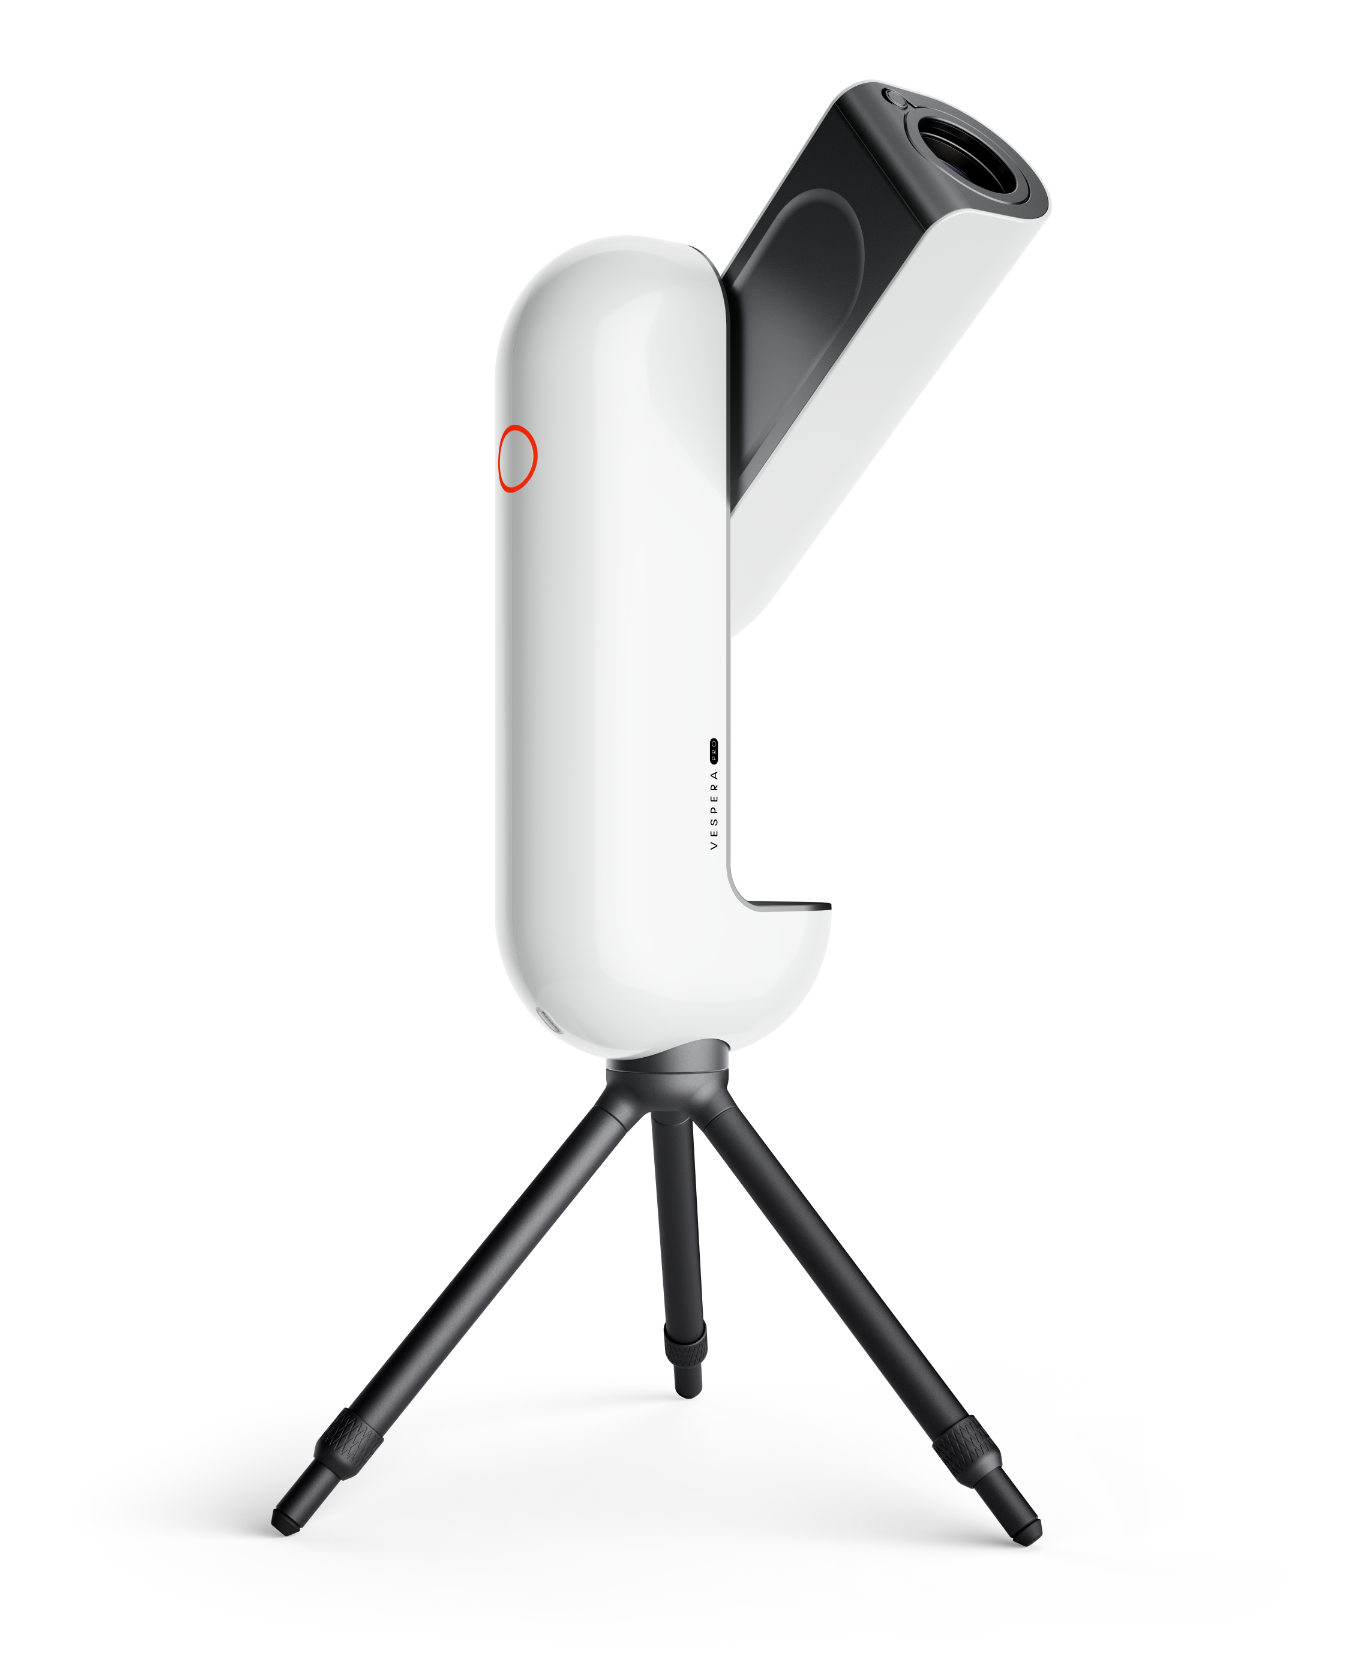 Vespera Pro smart telescope